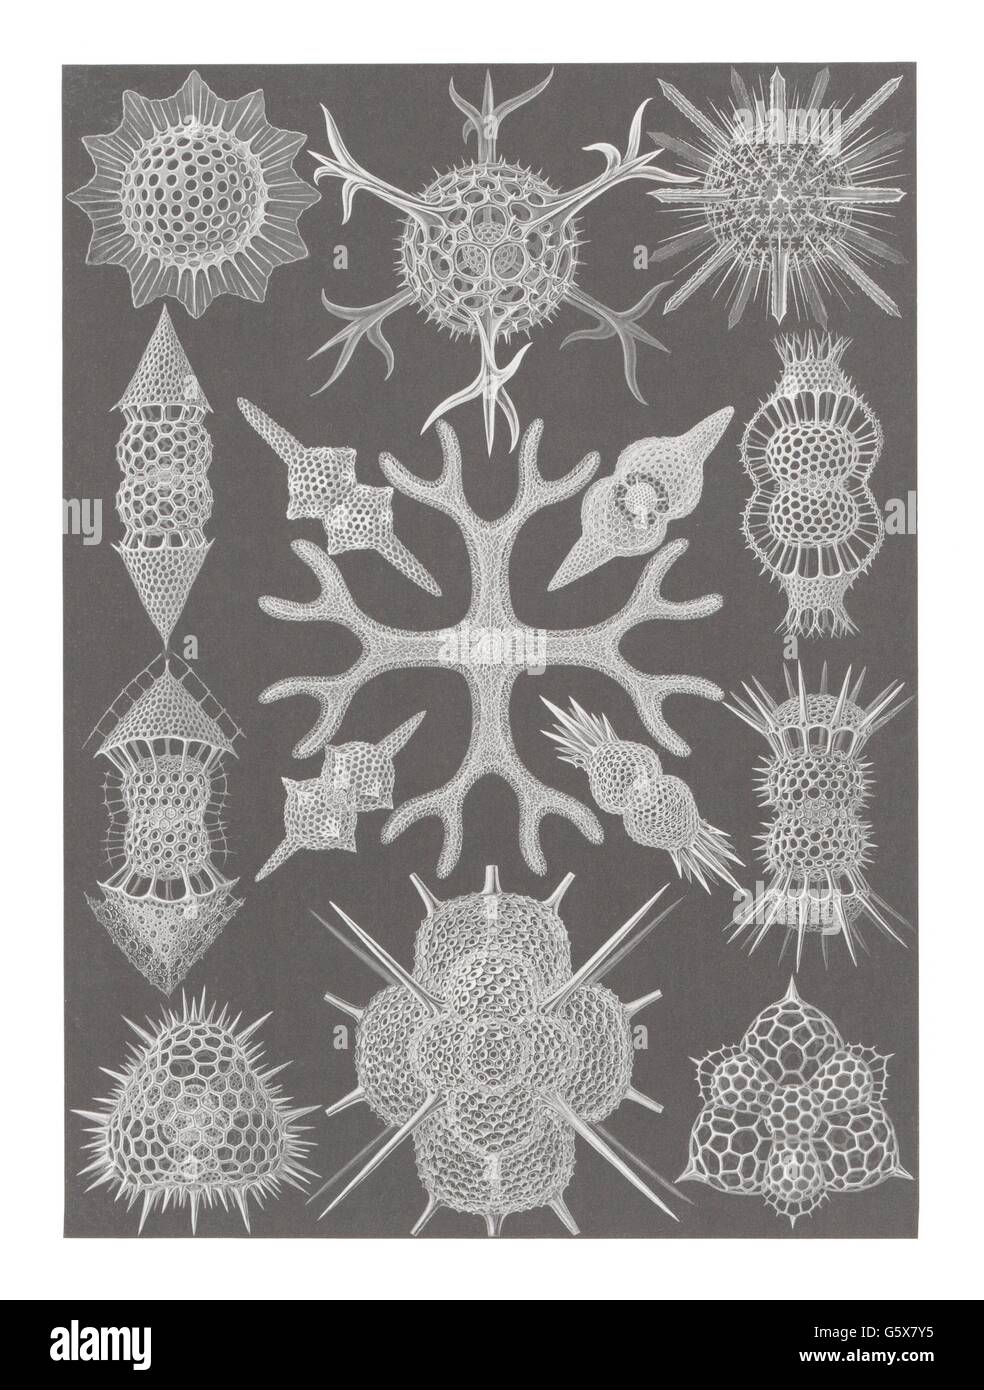 zoologie / Tiere, Spumellaria, Farblithographie, aus: Ernst Haeckel, 'Kunstformen der Natur', Leipzig - Wien, 1899 - 1904, Additional-Rights-Clearences-not available Stockfoto